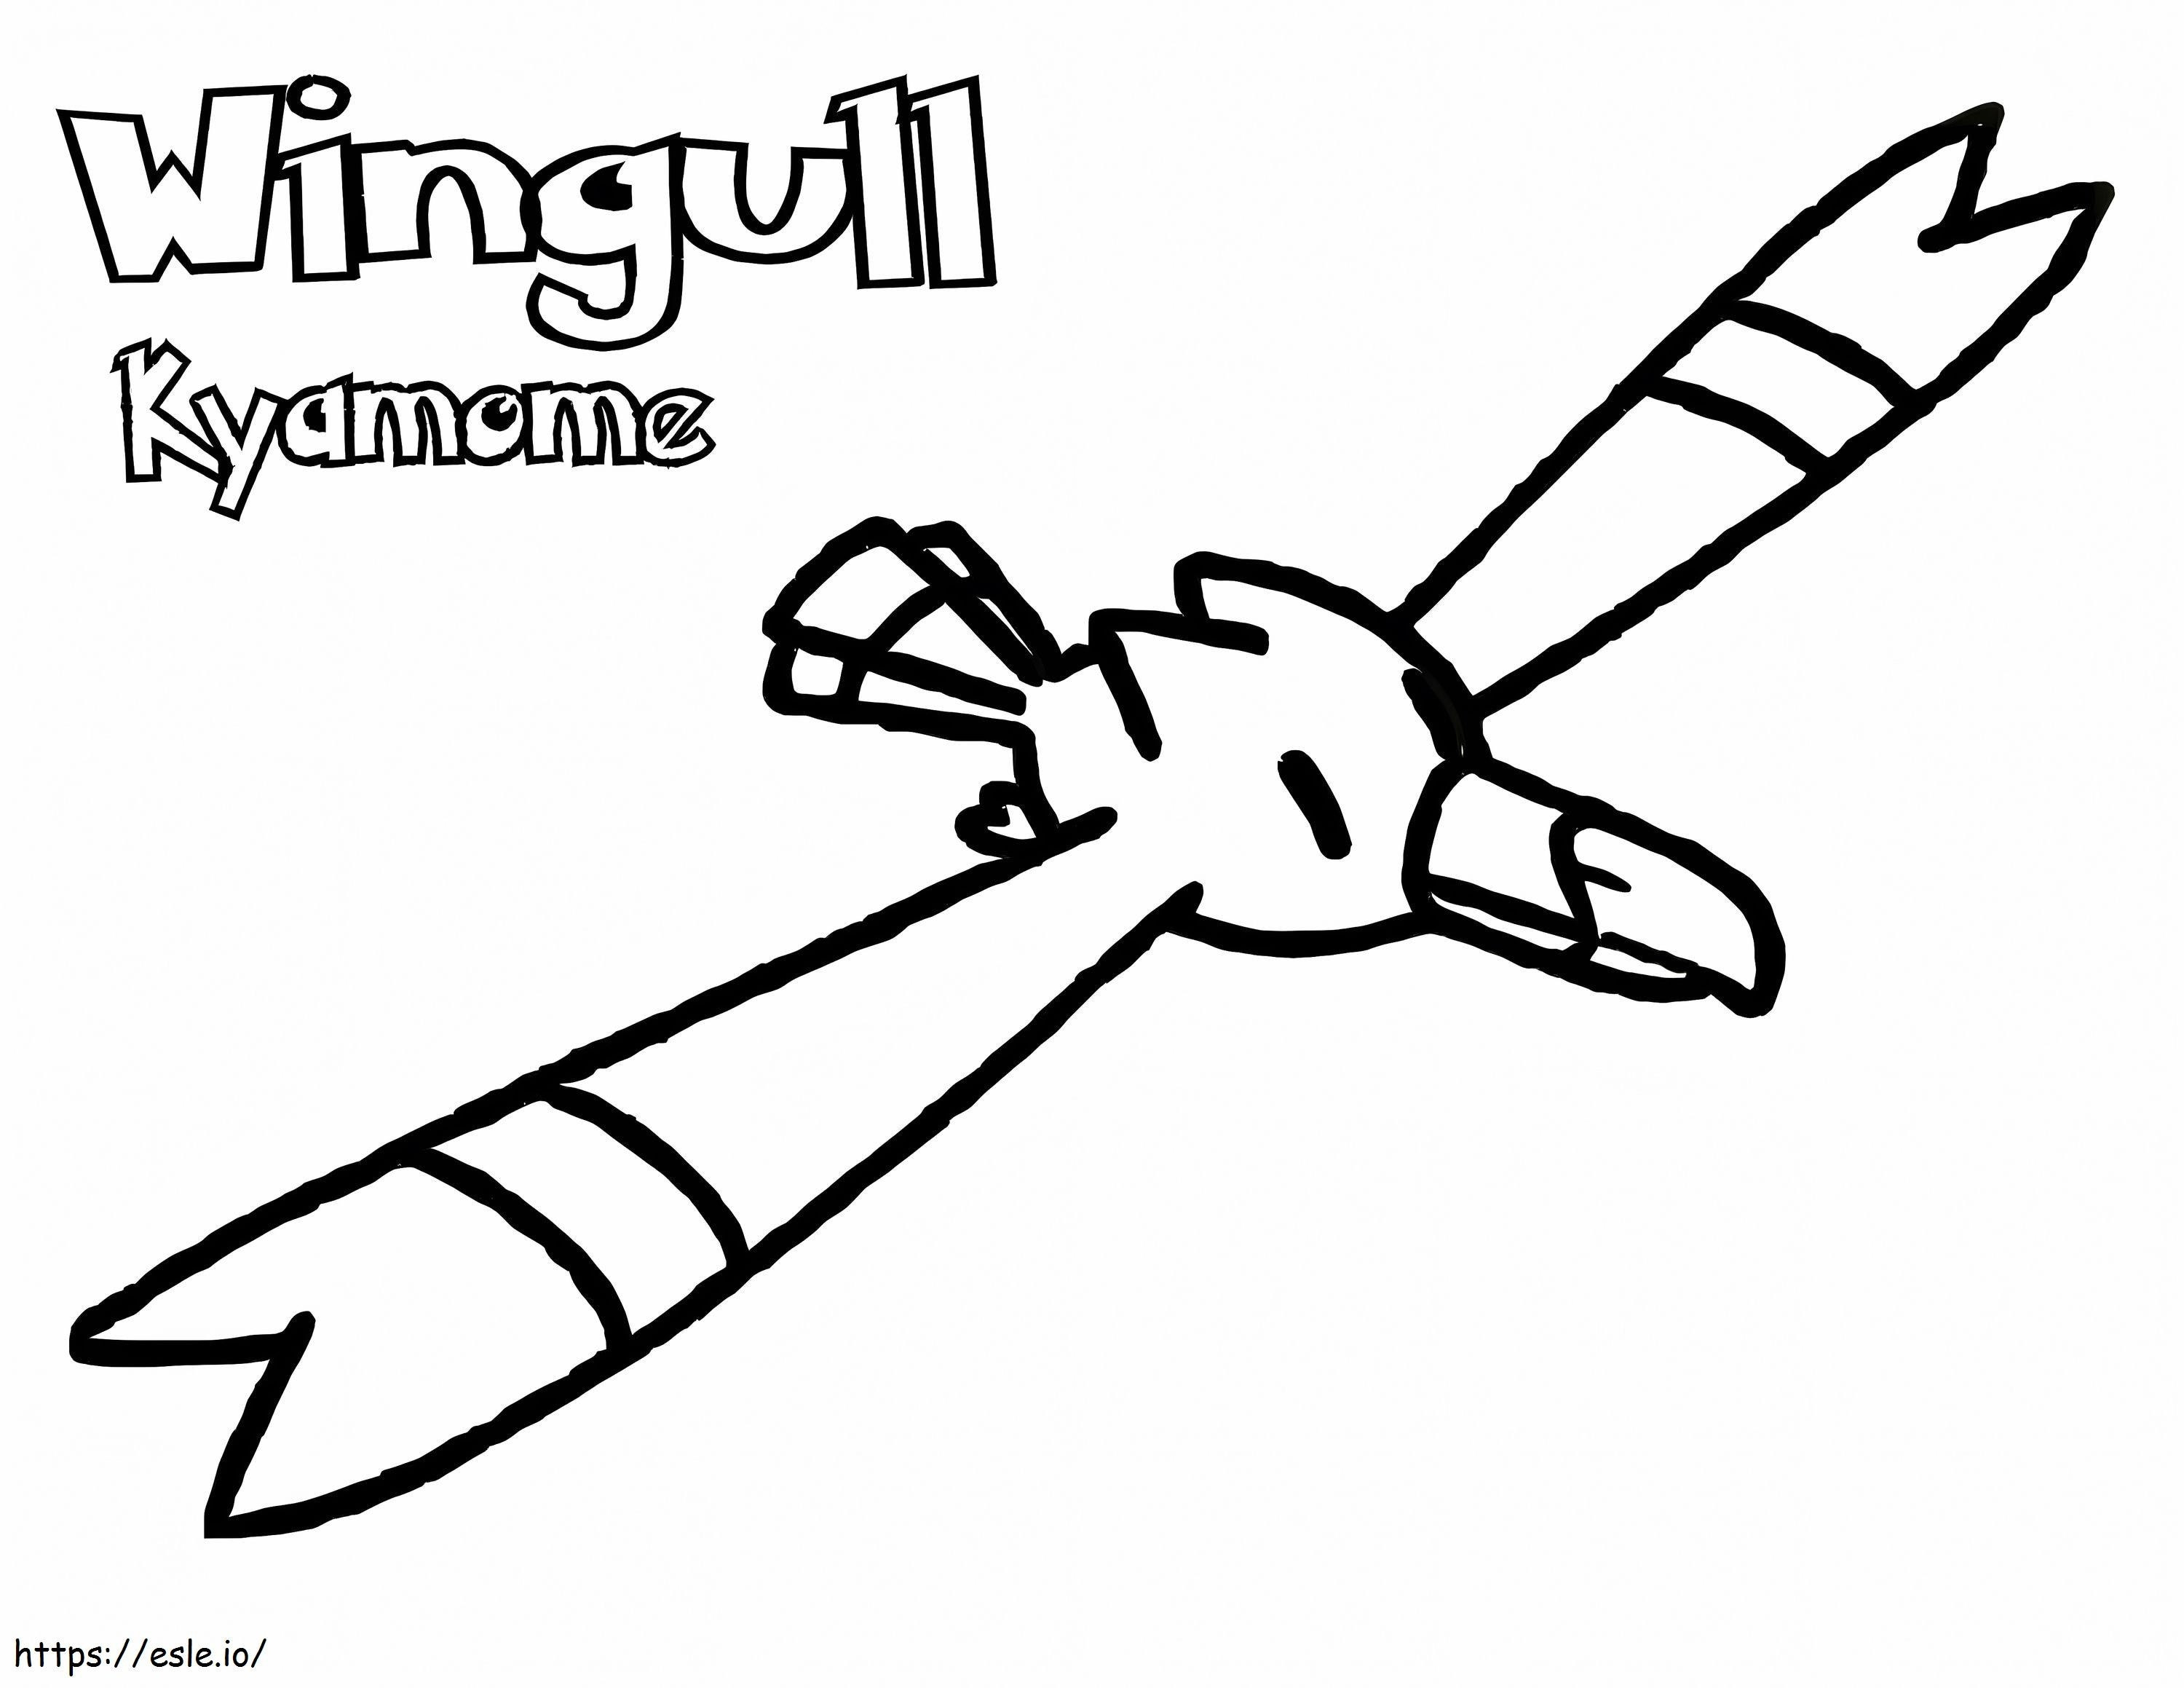 Printable Wingull Pokemon coloring page